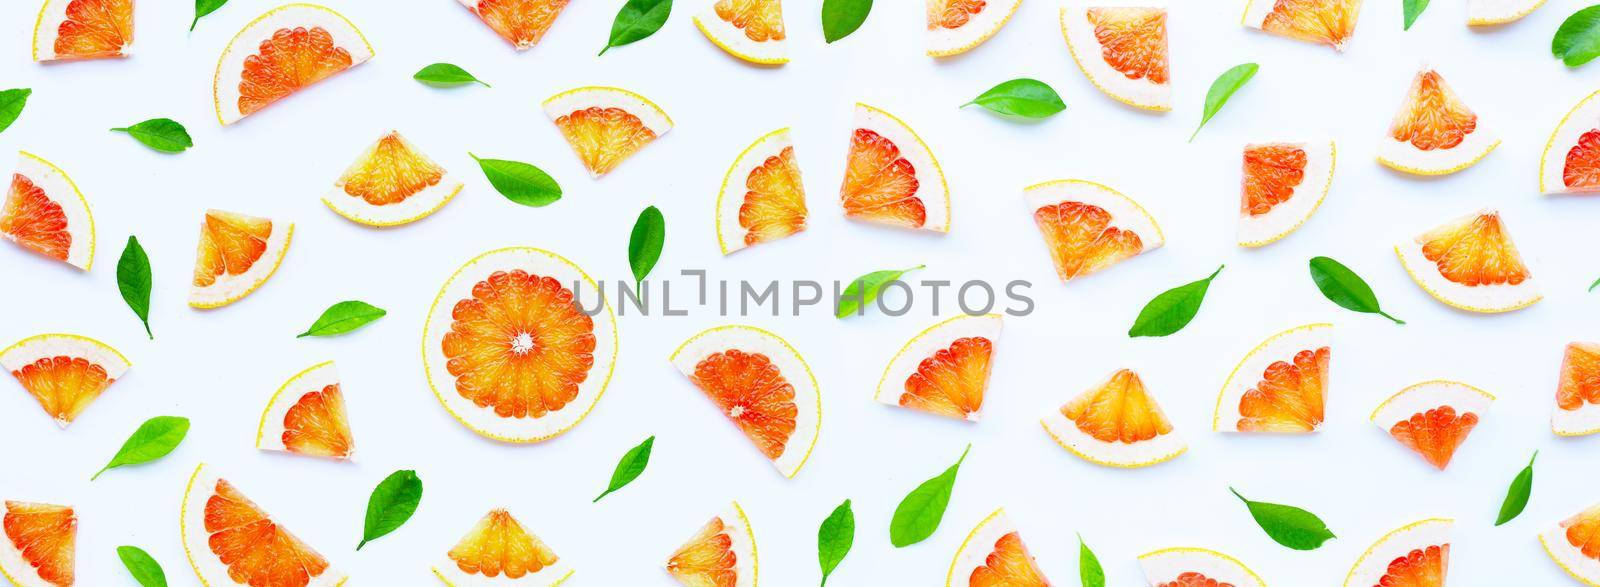 High vitamin C. Juicy grapefruit slices on white background.